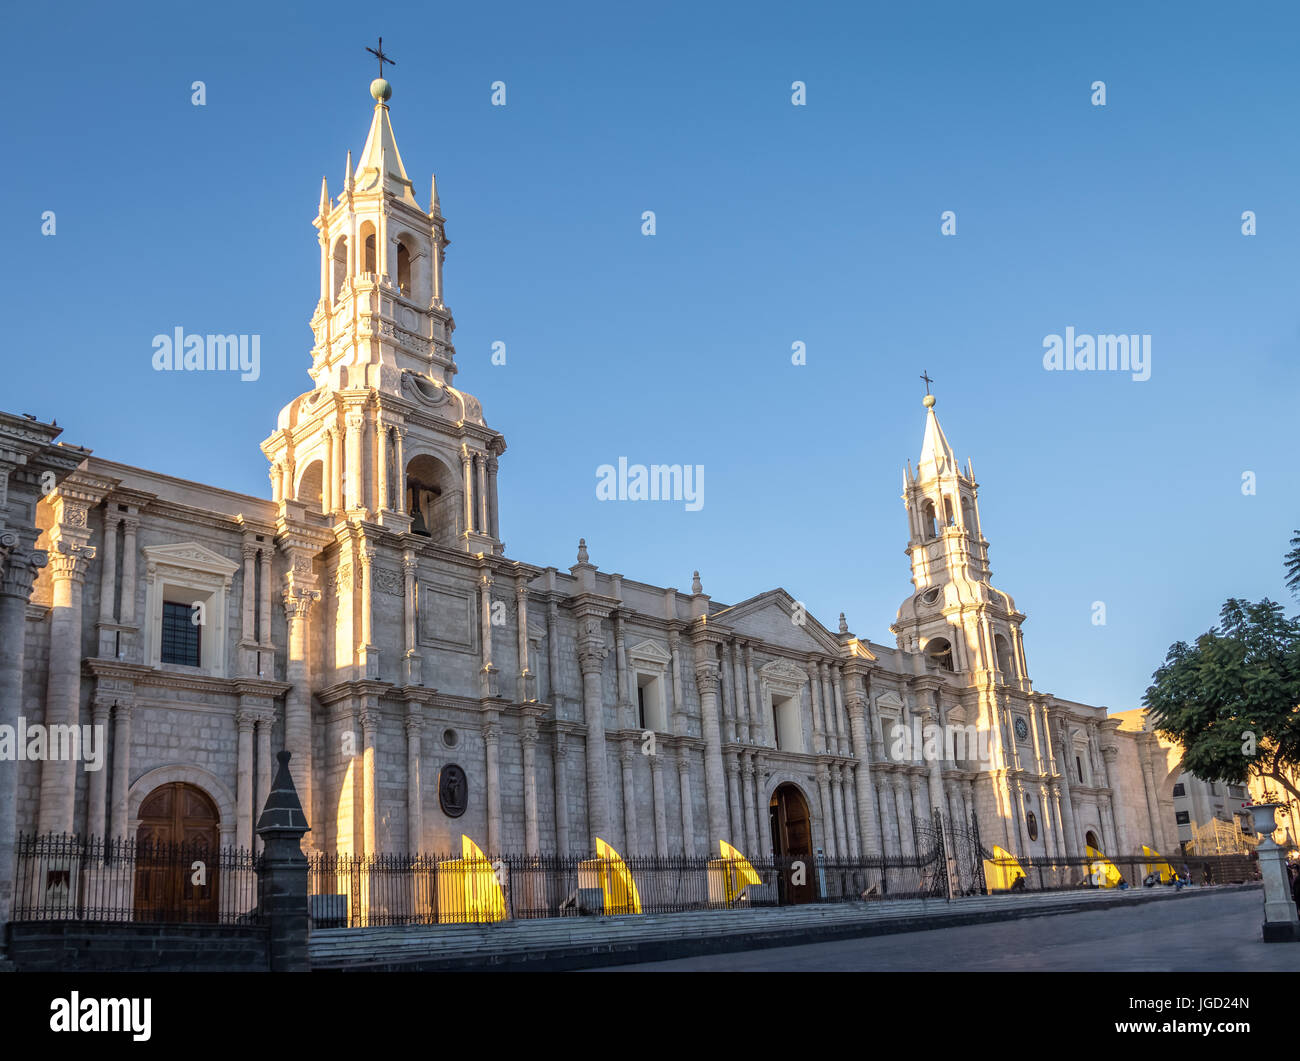 Cathedral at Plaza de Armas - Arequipa, Peru Stock Photo